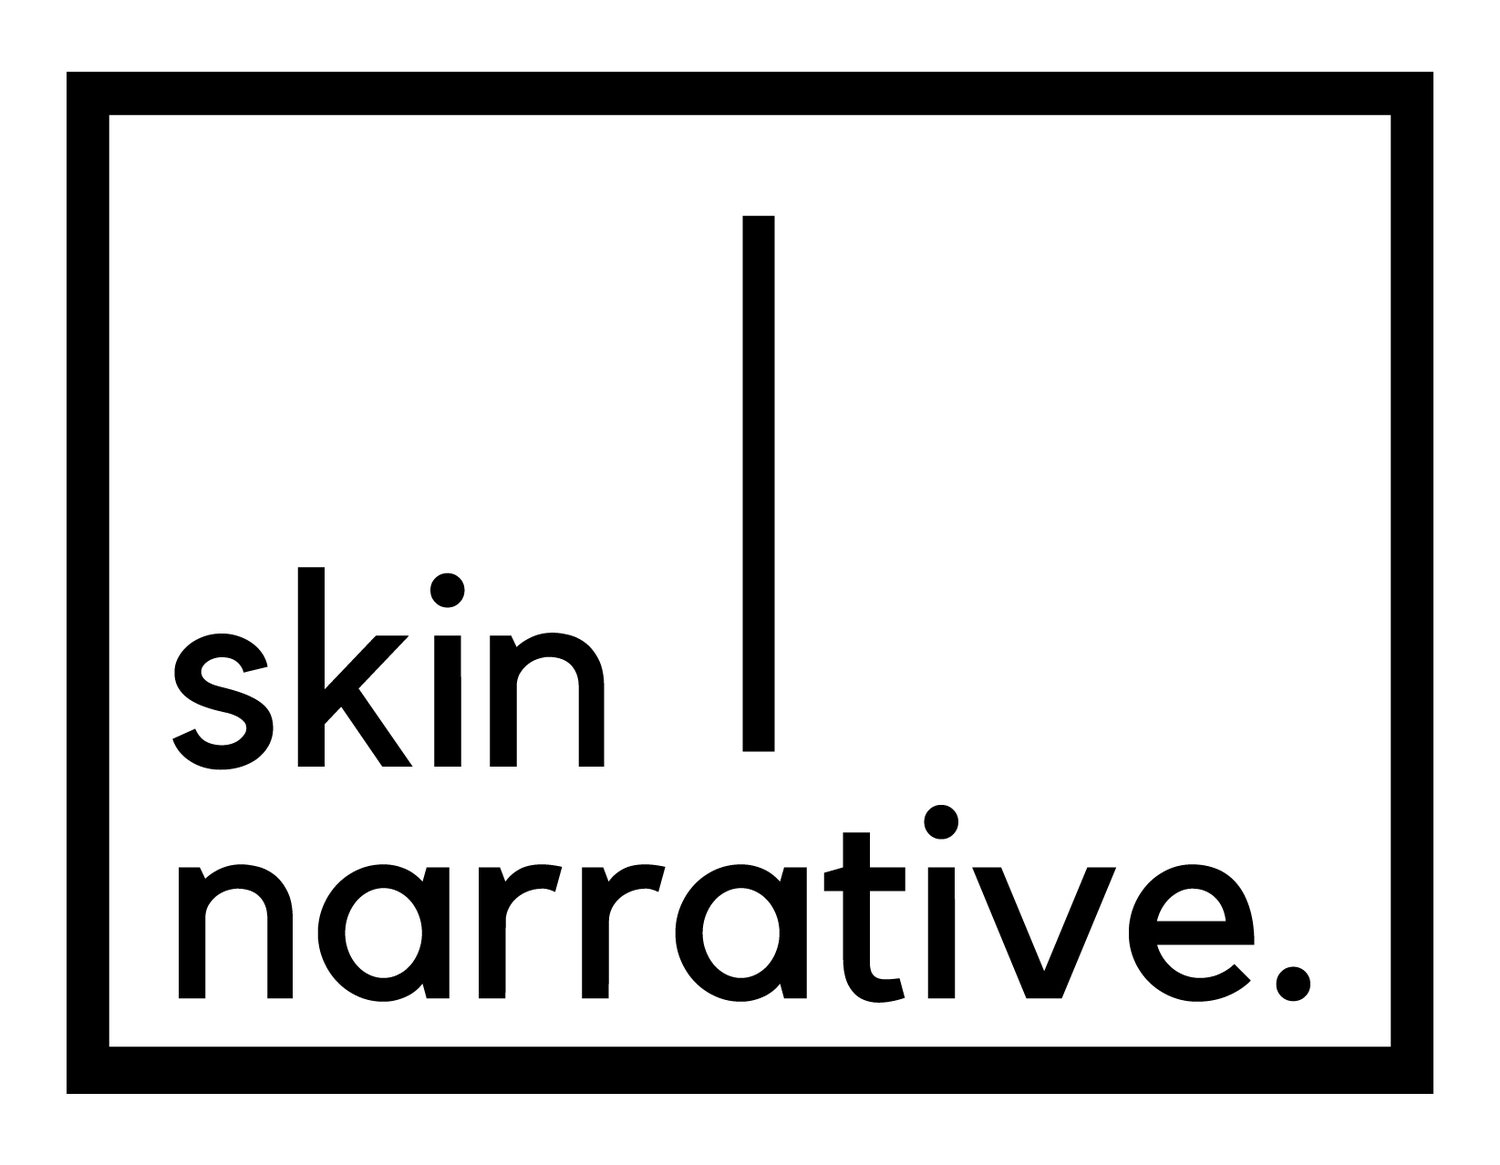 Skin Narrative